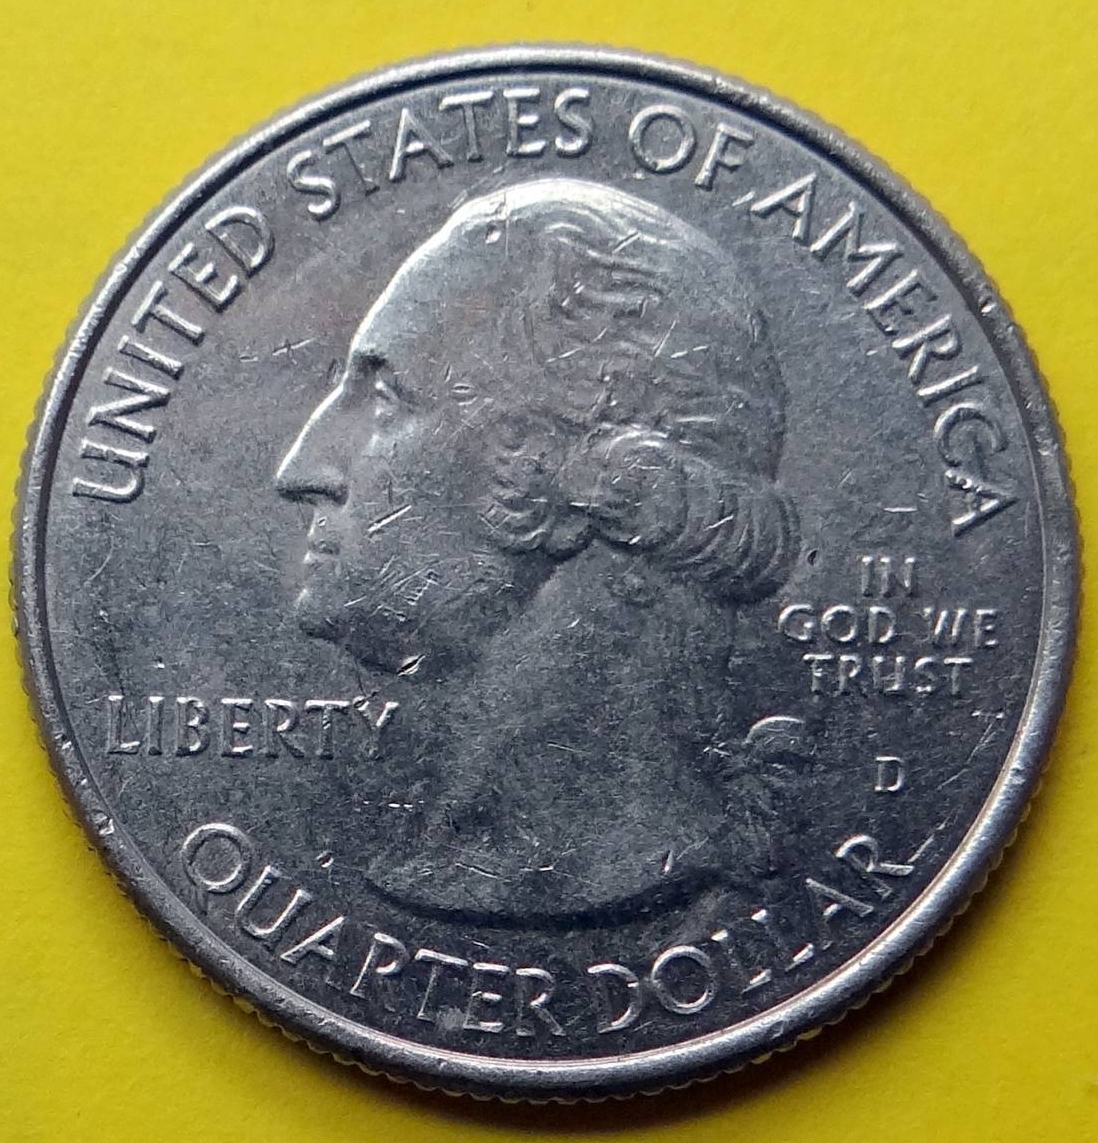 Сколько стоит доллар 2012. Квартер доллар. United States of America Quarter Dollar. United States of America монета. Quarter Dollar 1966г.